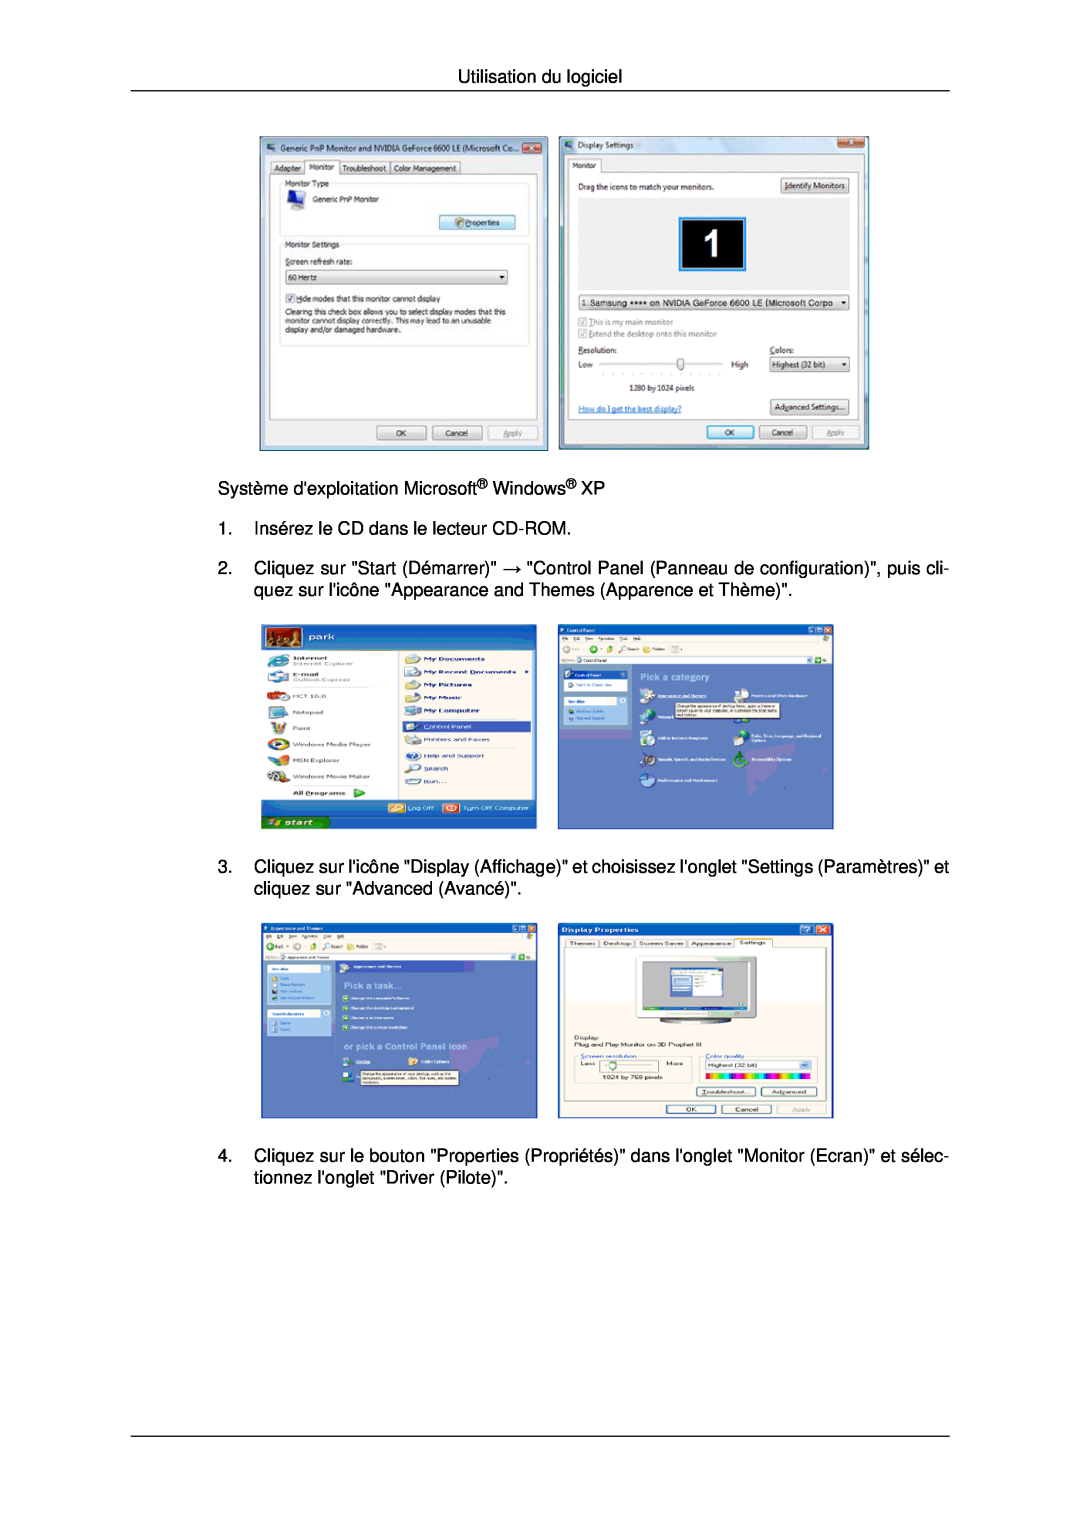 Samsung LH40MRTLBC/EN, LH46MRPLBF/EN, LH40MRPLBF/EN Utilisation du logiciel, Système dexploitation Microsoft Windows XP 